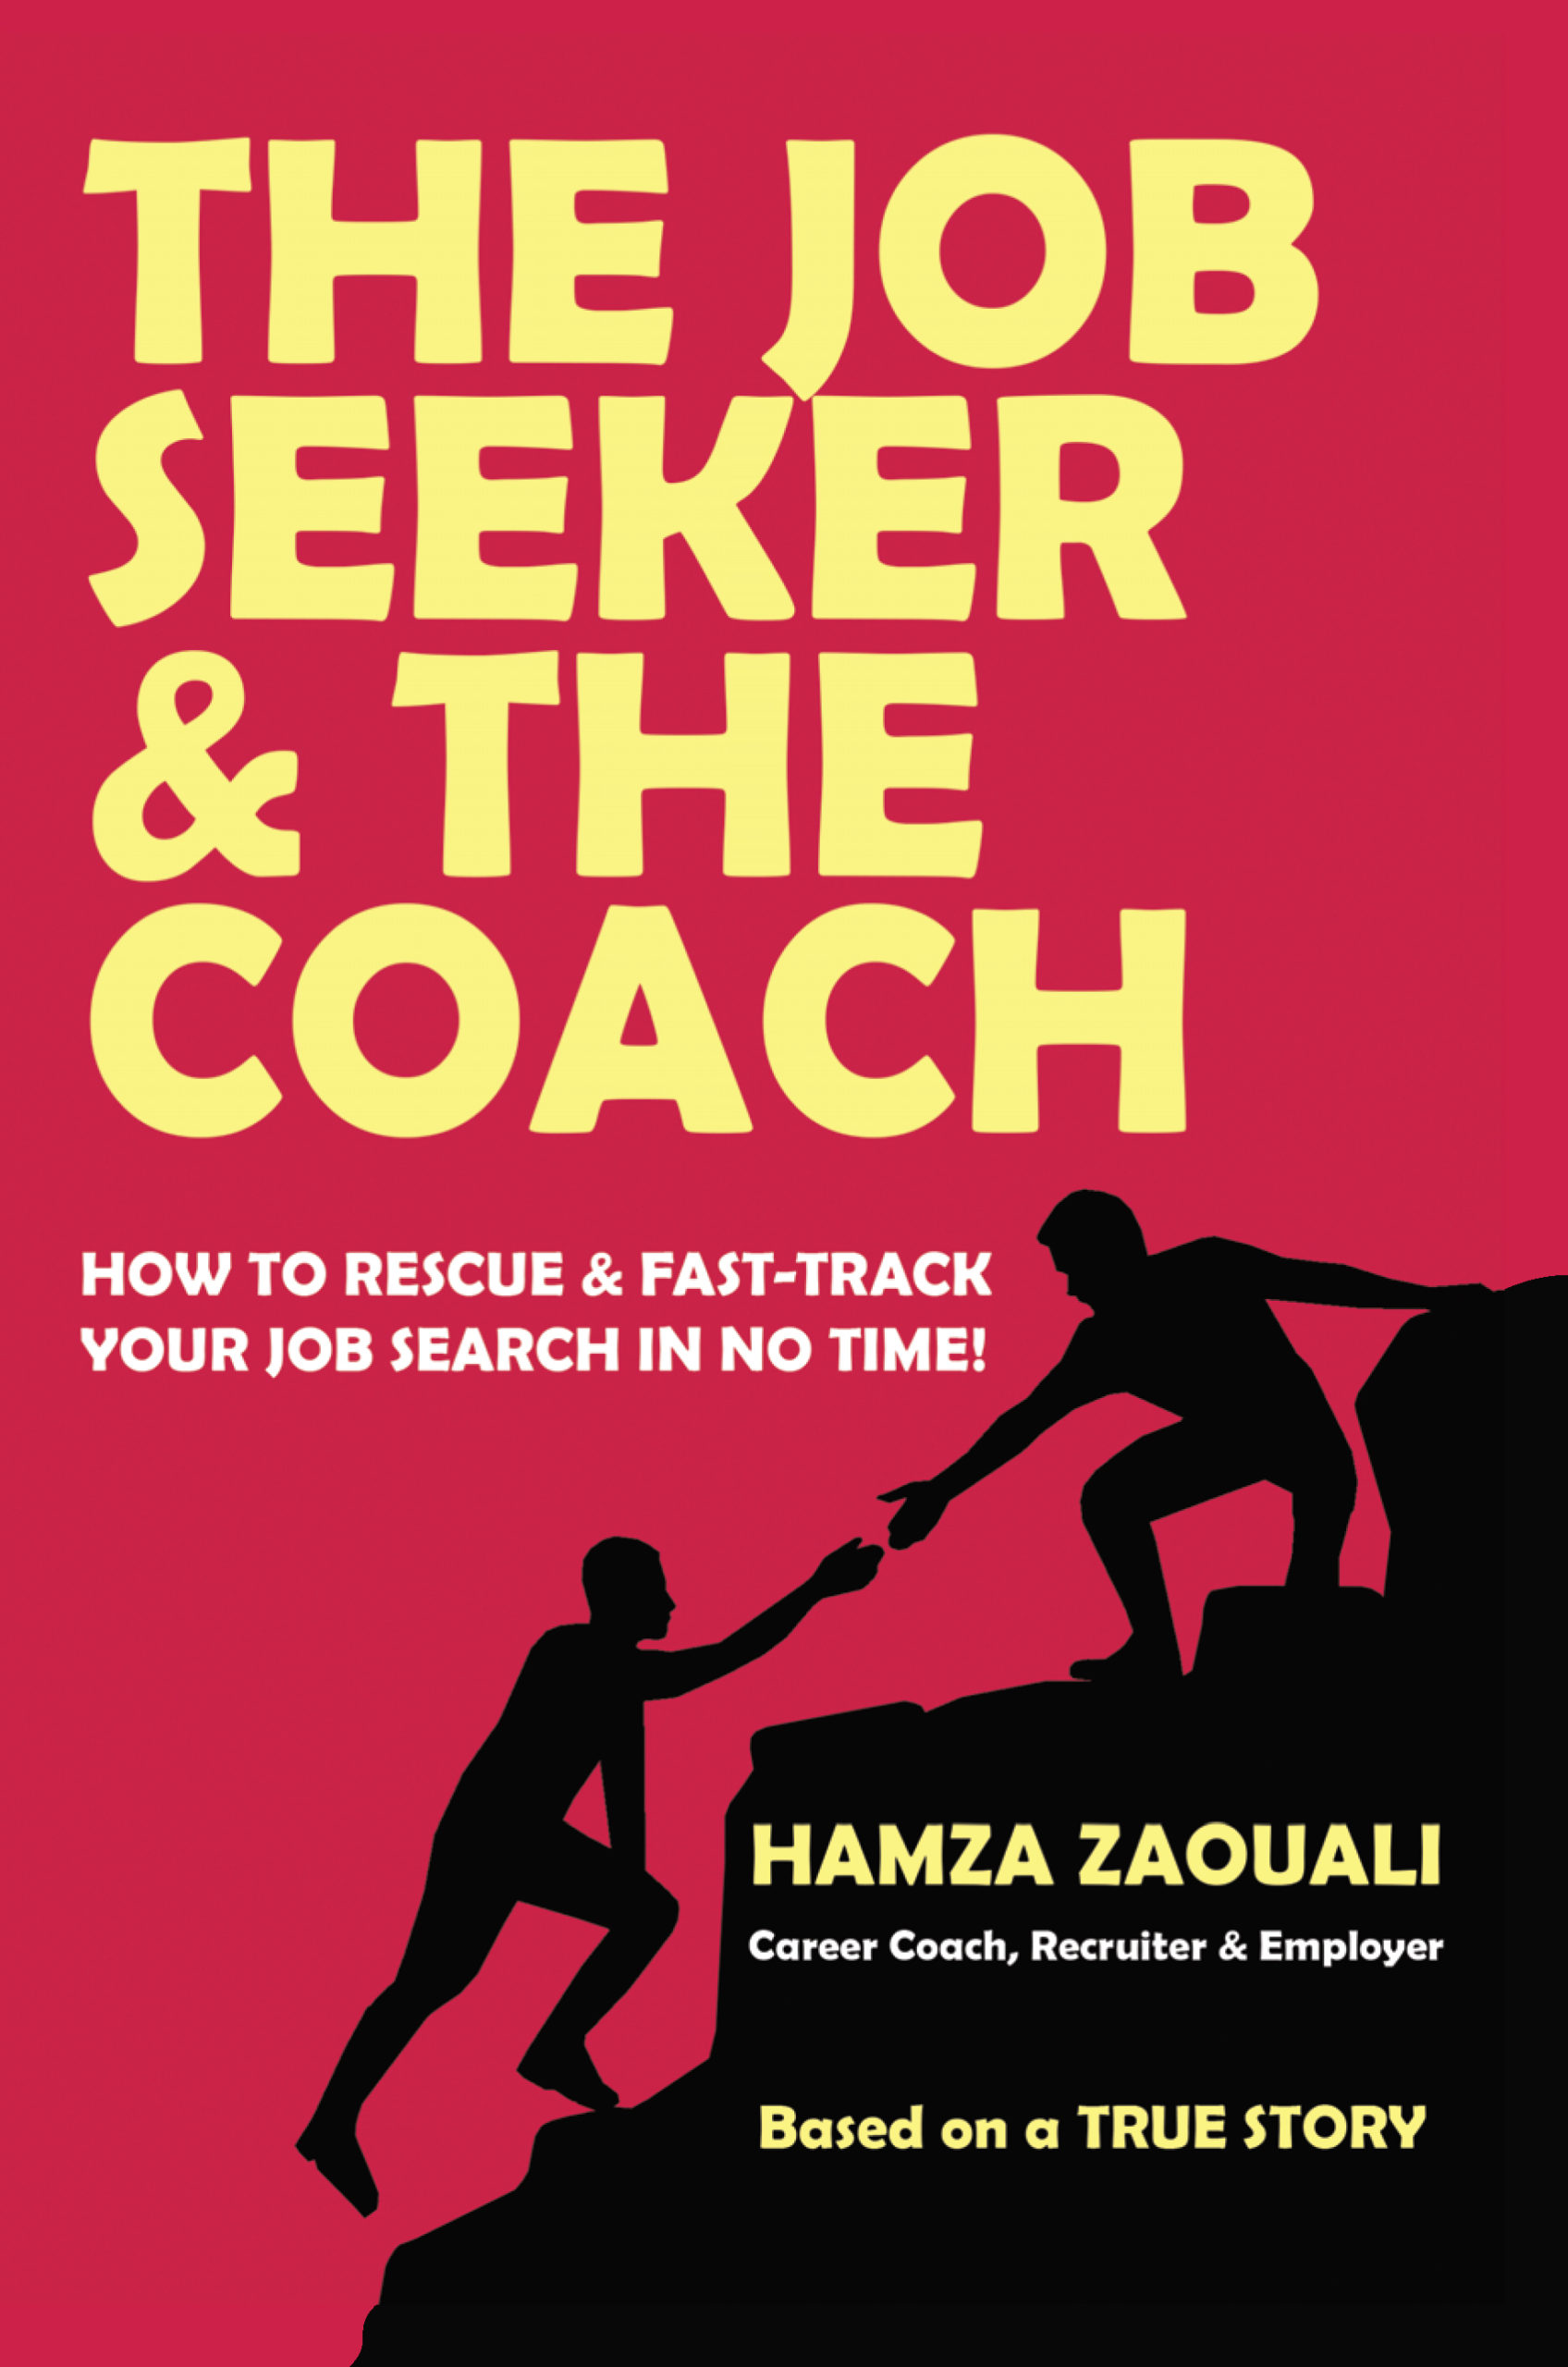 FREE: The Job Seeker & The Coach by Hamza Zaouali